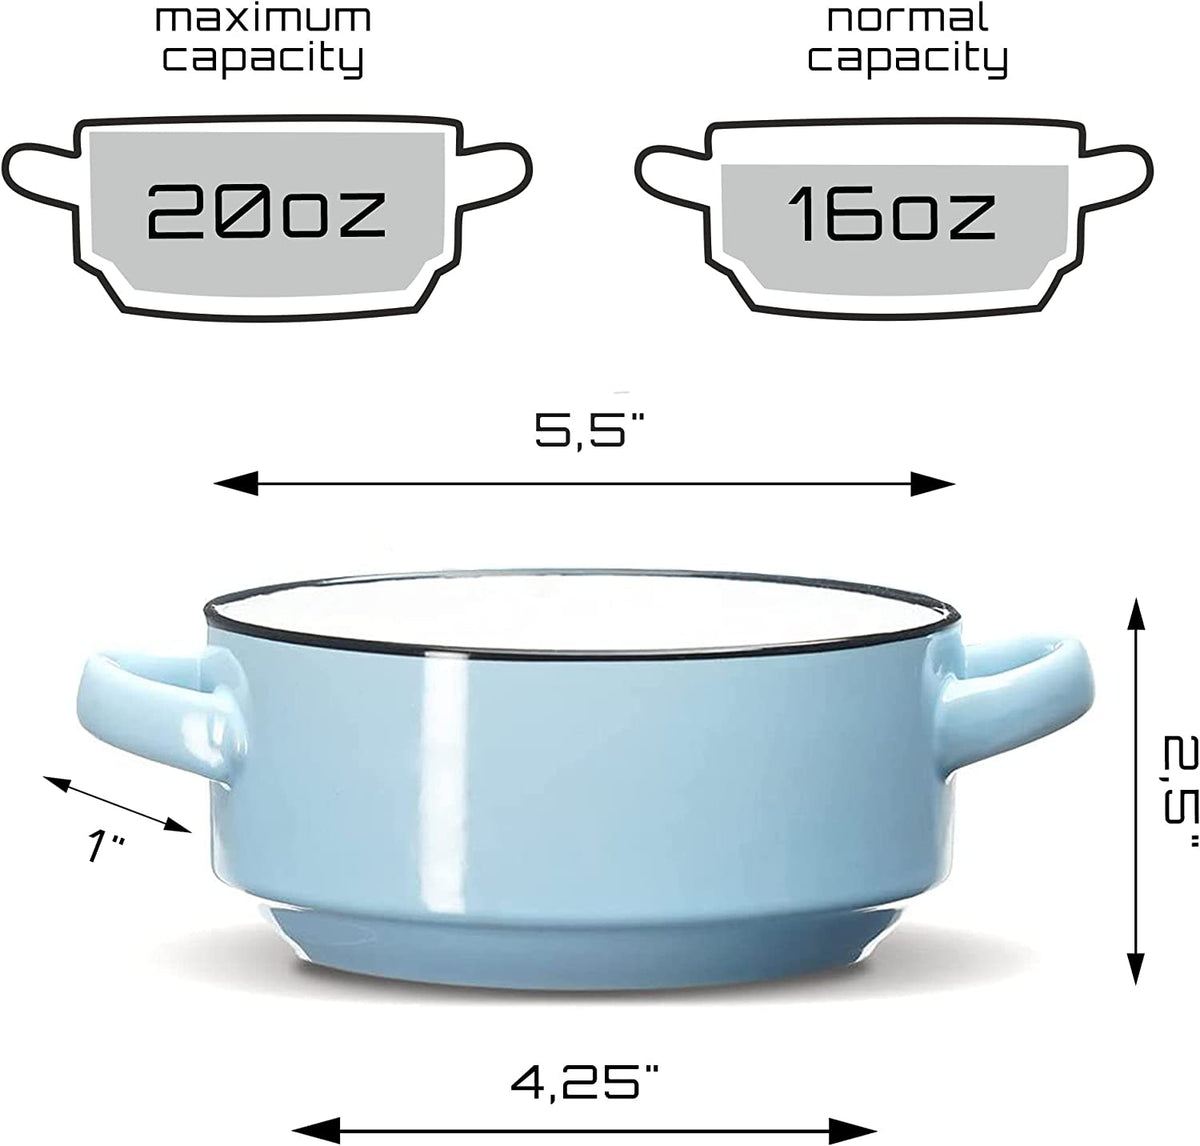 Baking Serving Ceramic Blue Soup Bowls Crocks with Handles - 16 Ounce - Set of 2